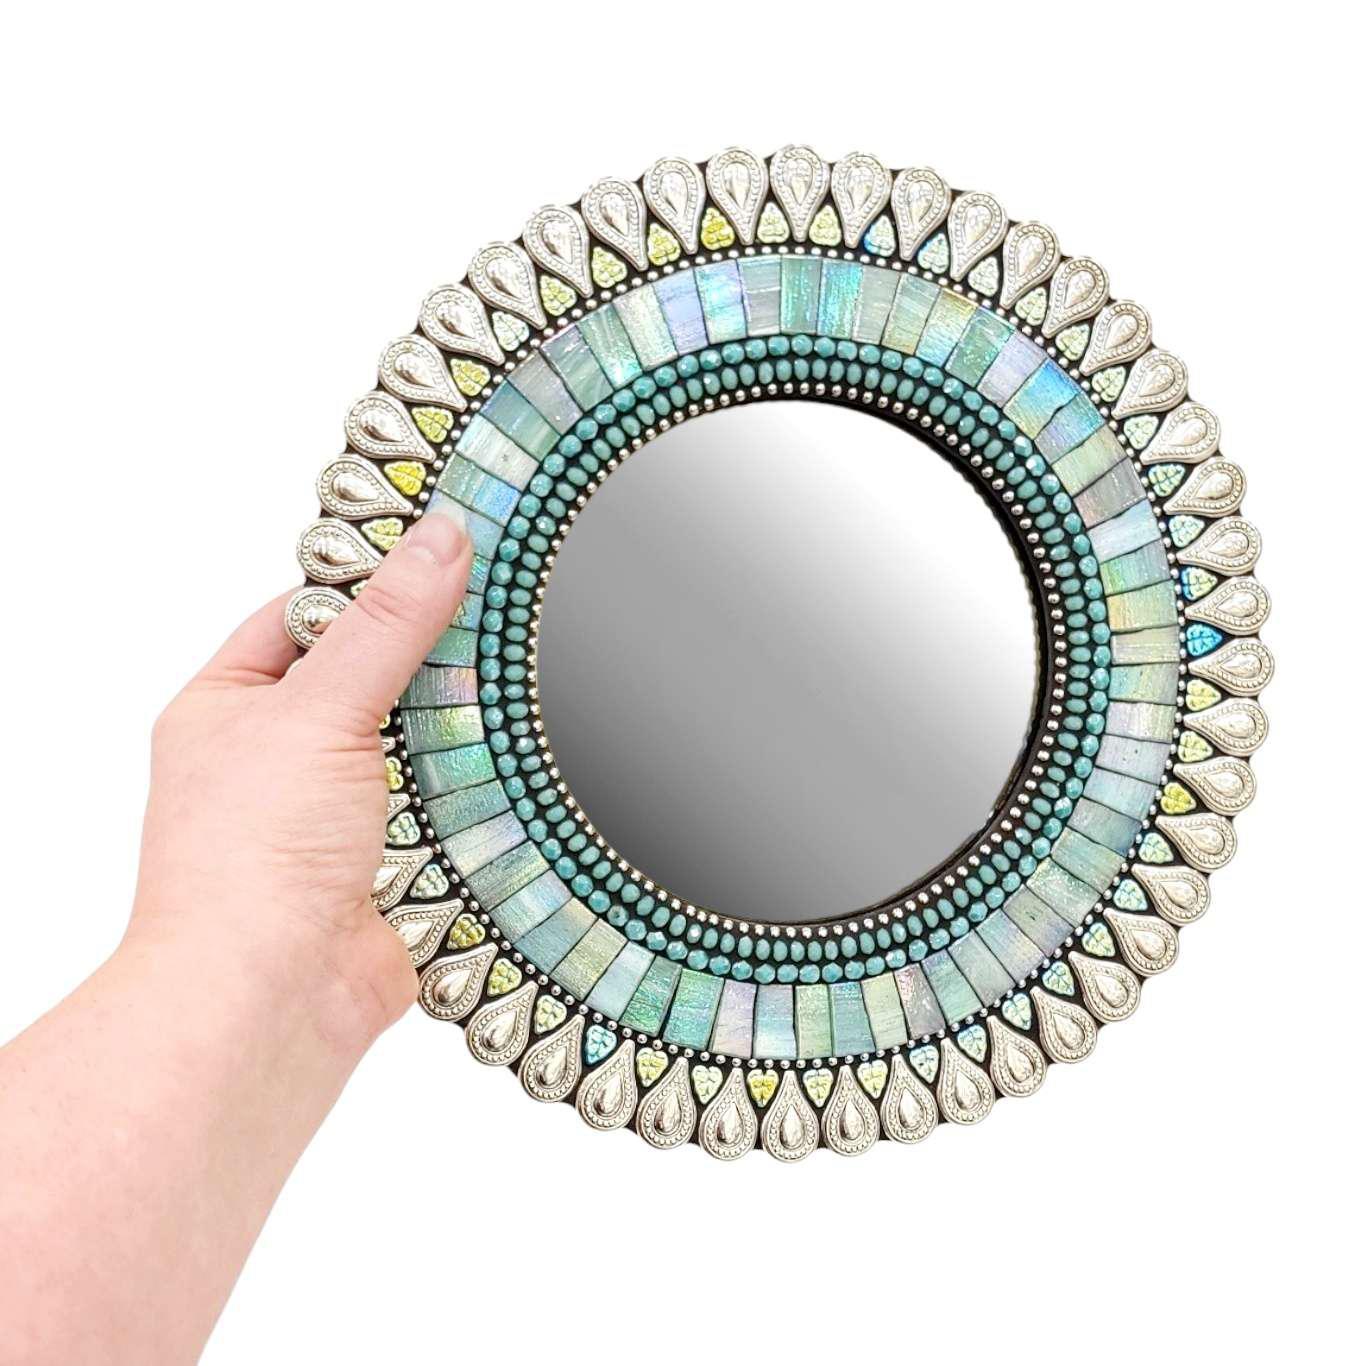 Mosaic Mirror - 10in Round in Seafoam Drop by Zetamari Mosaic Artworks